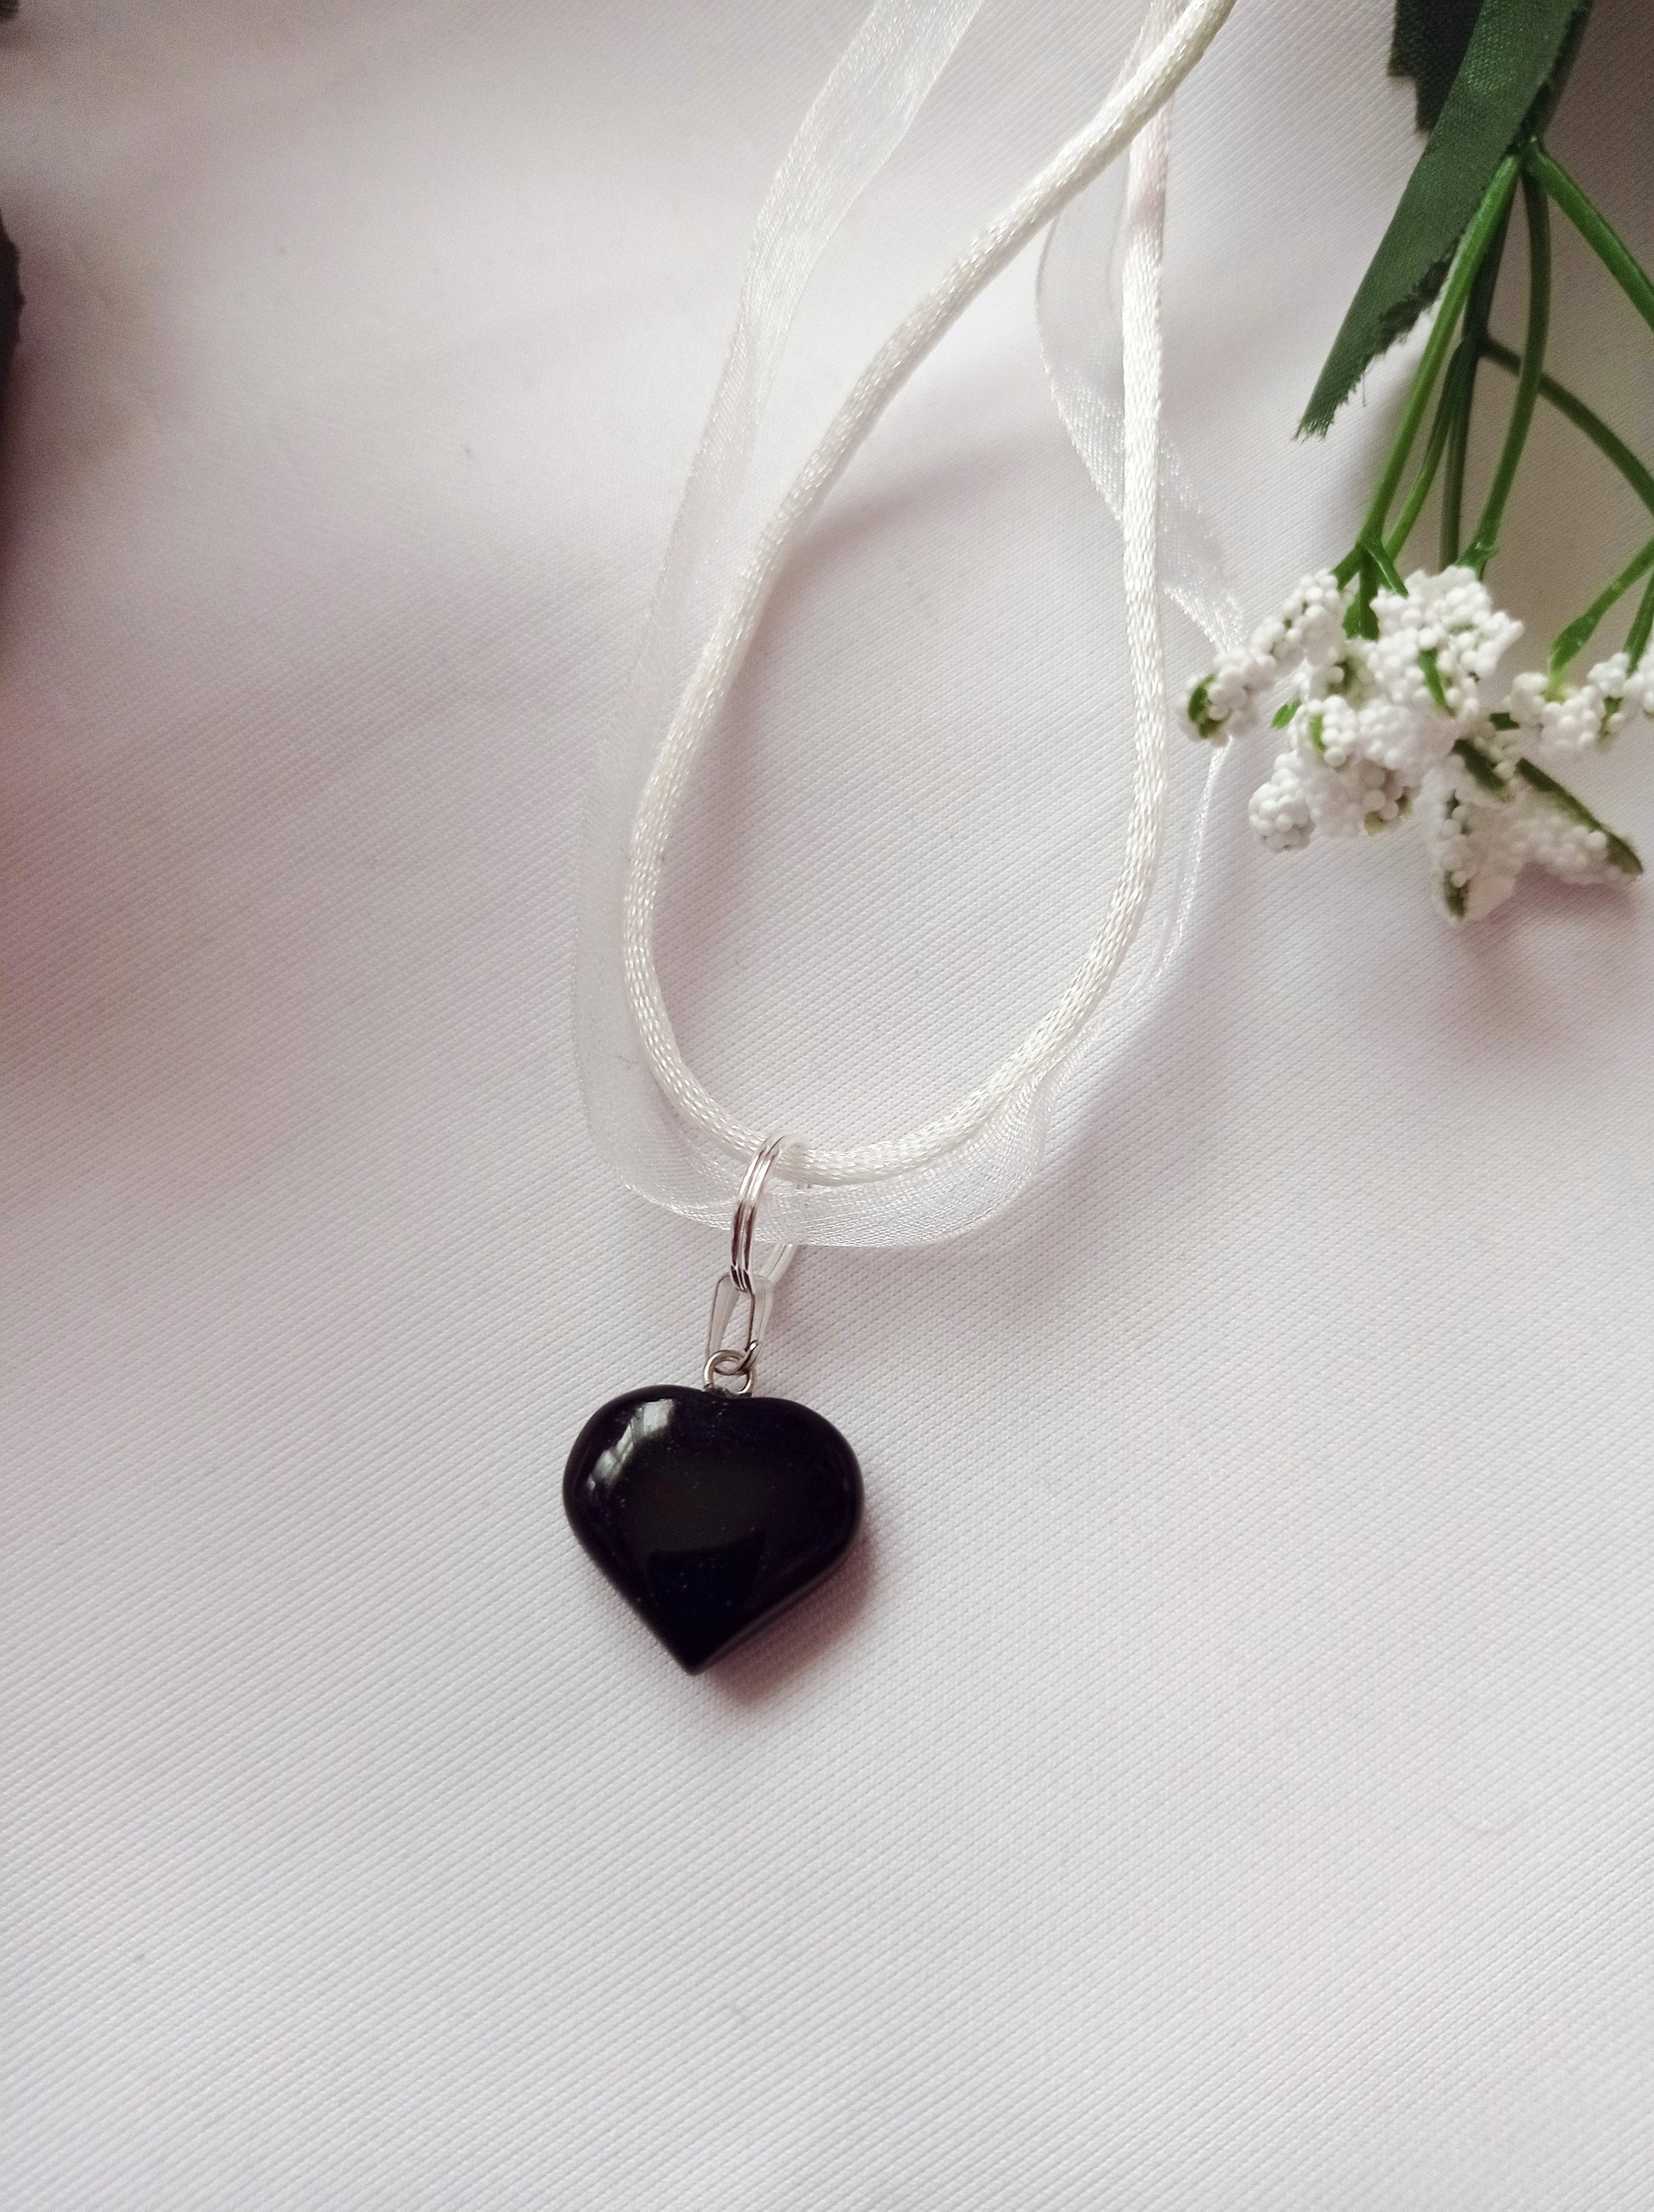 Black Onyx Necklace, White Ribbon Necklace, Gemstone Necklace, Black and White | by nlanlaVictory-1